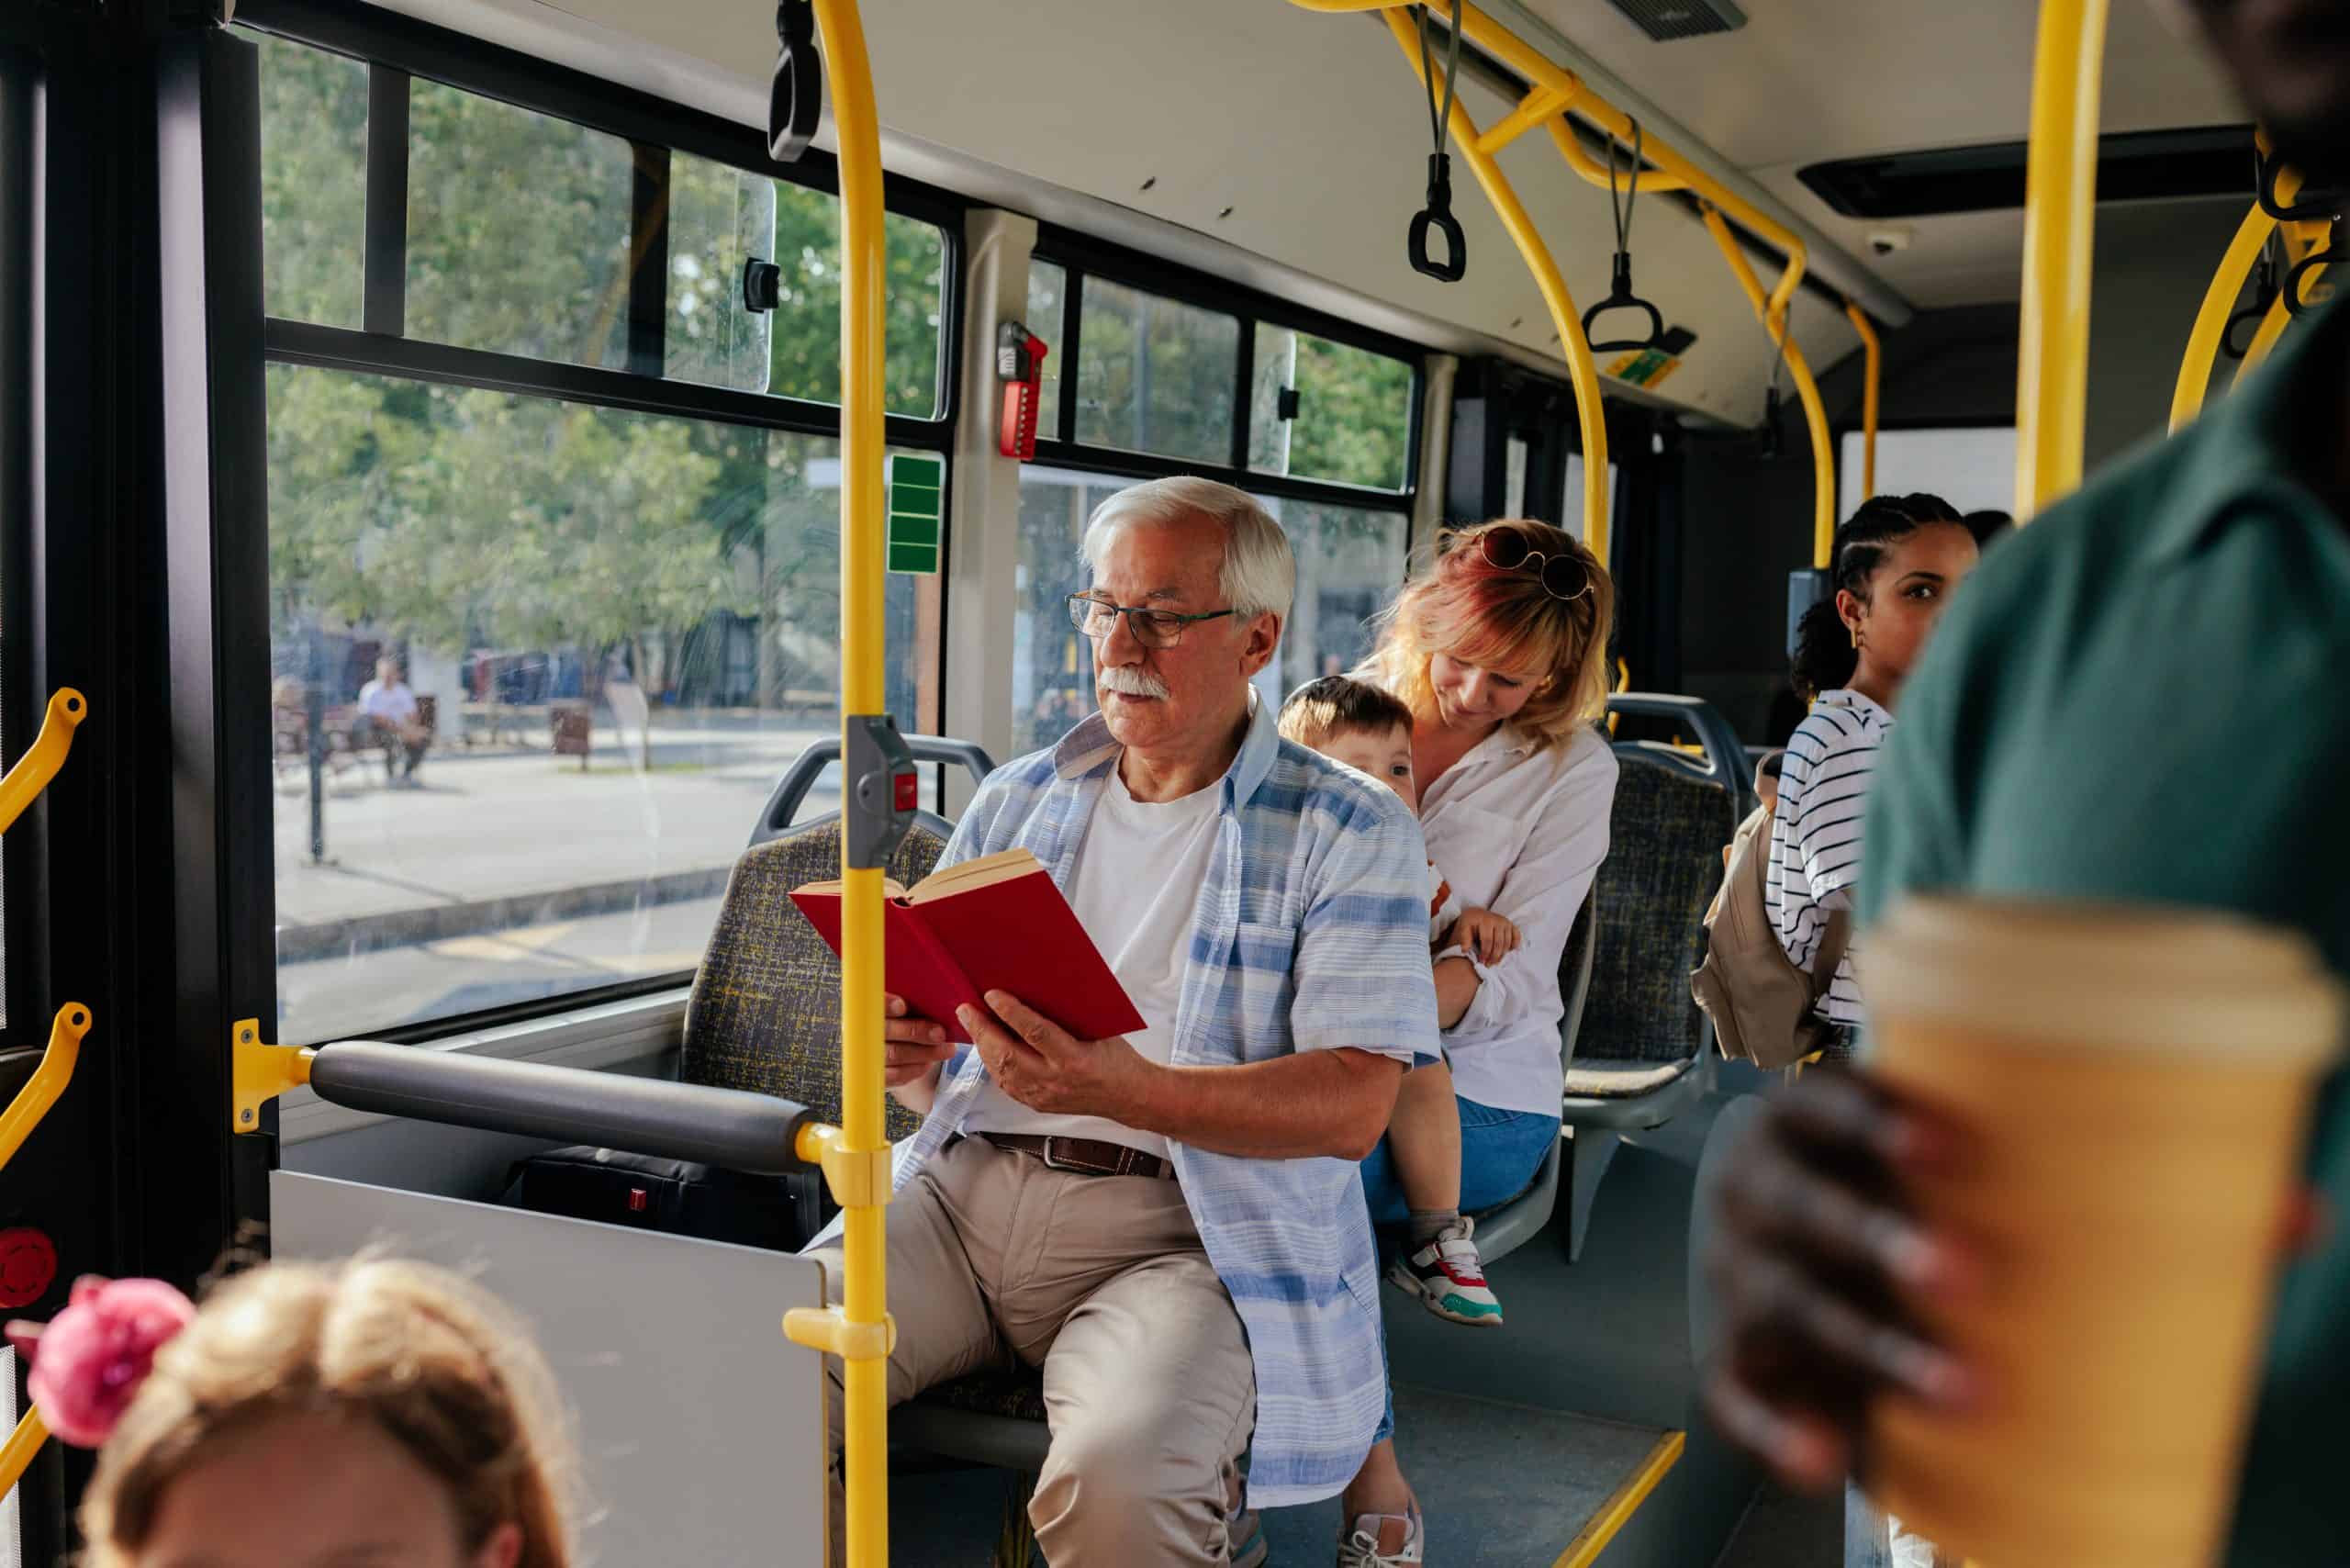 Senior reading a book on a bus